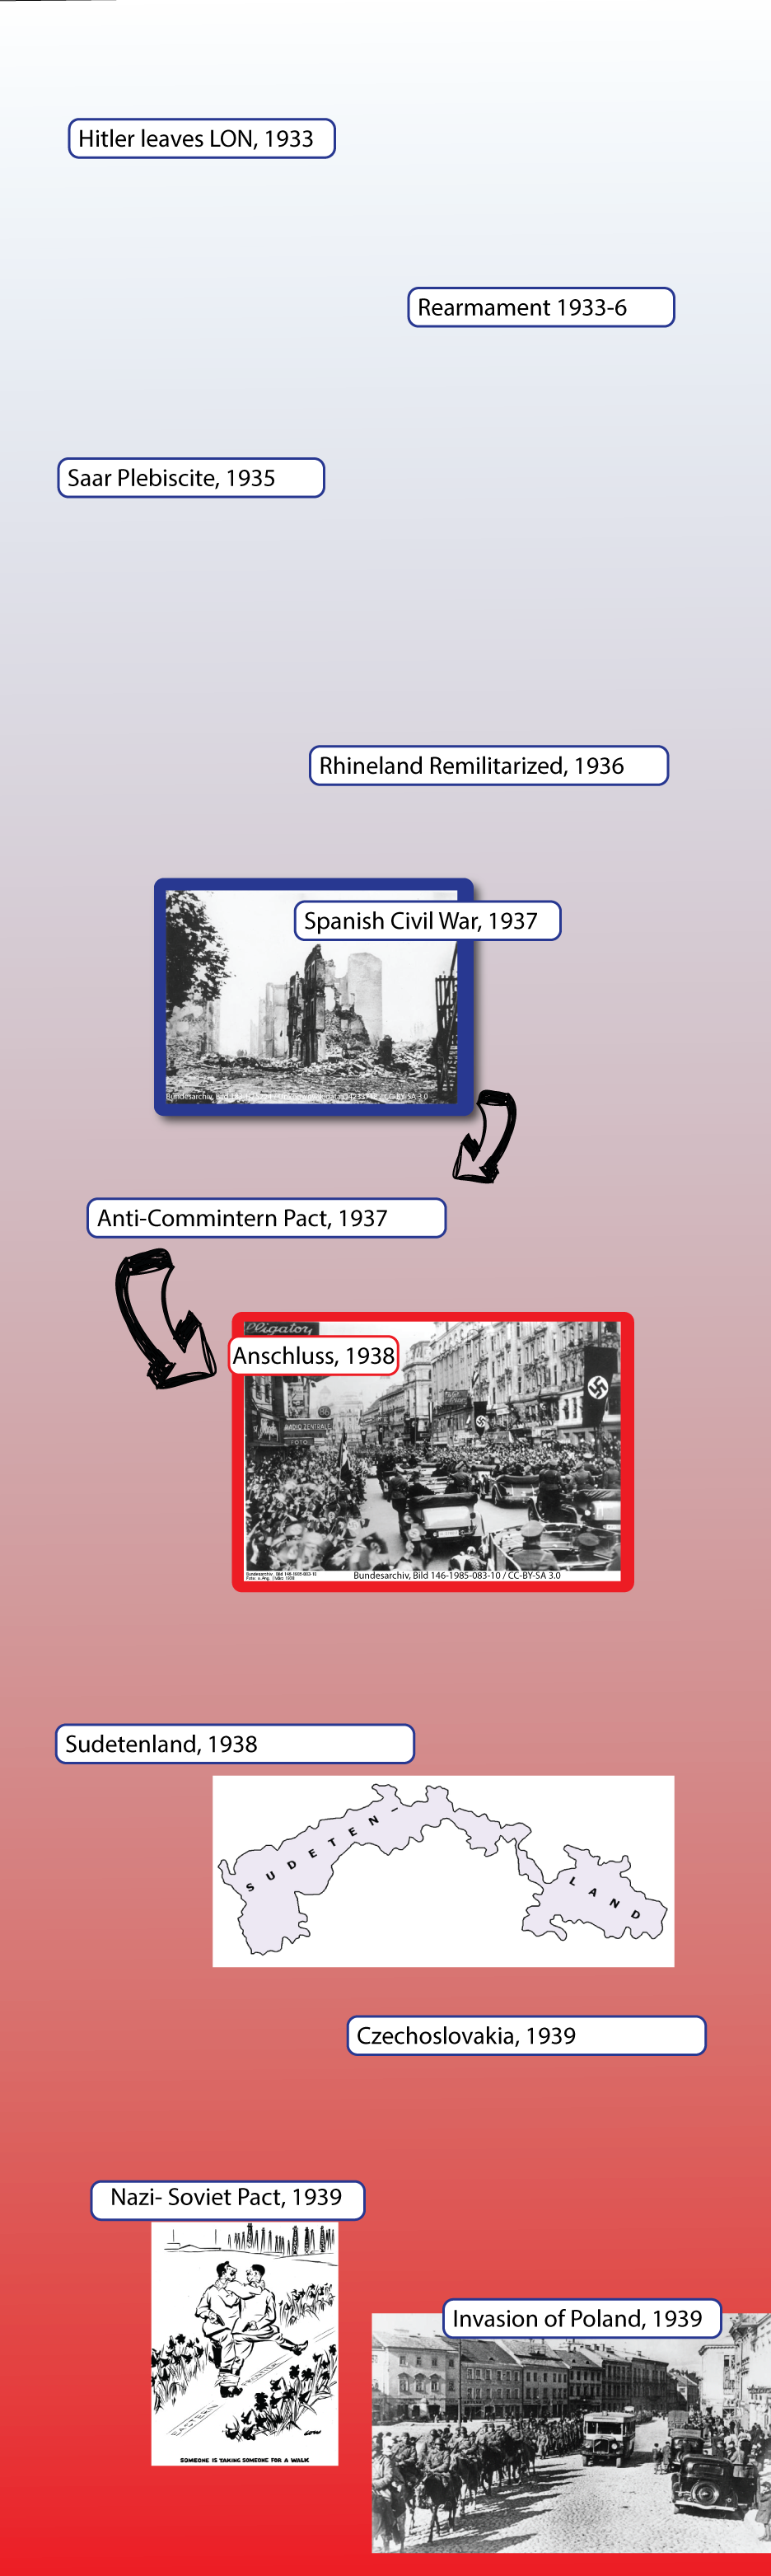 IGCSE history, road to war, timeline 